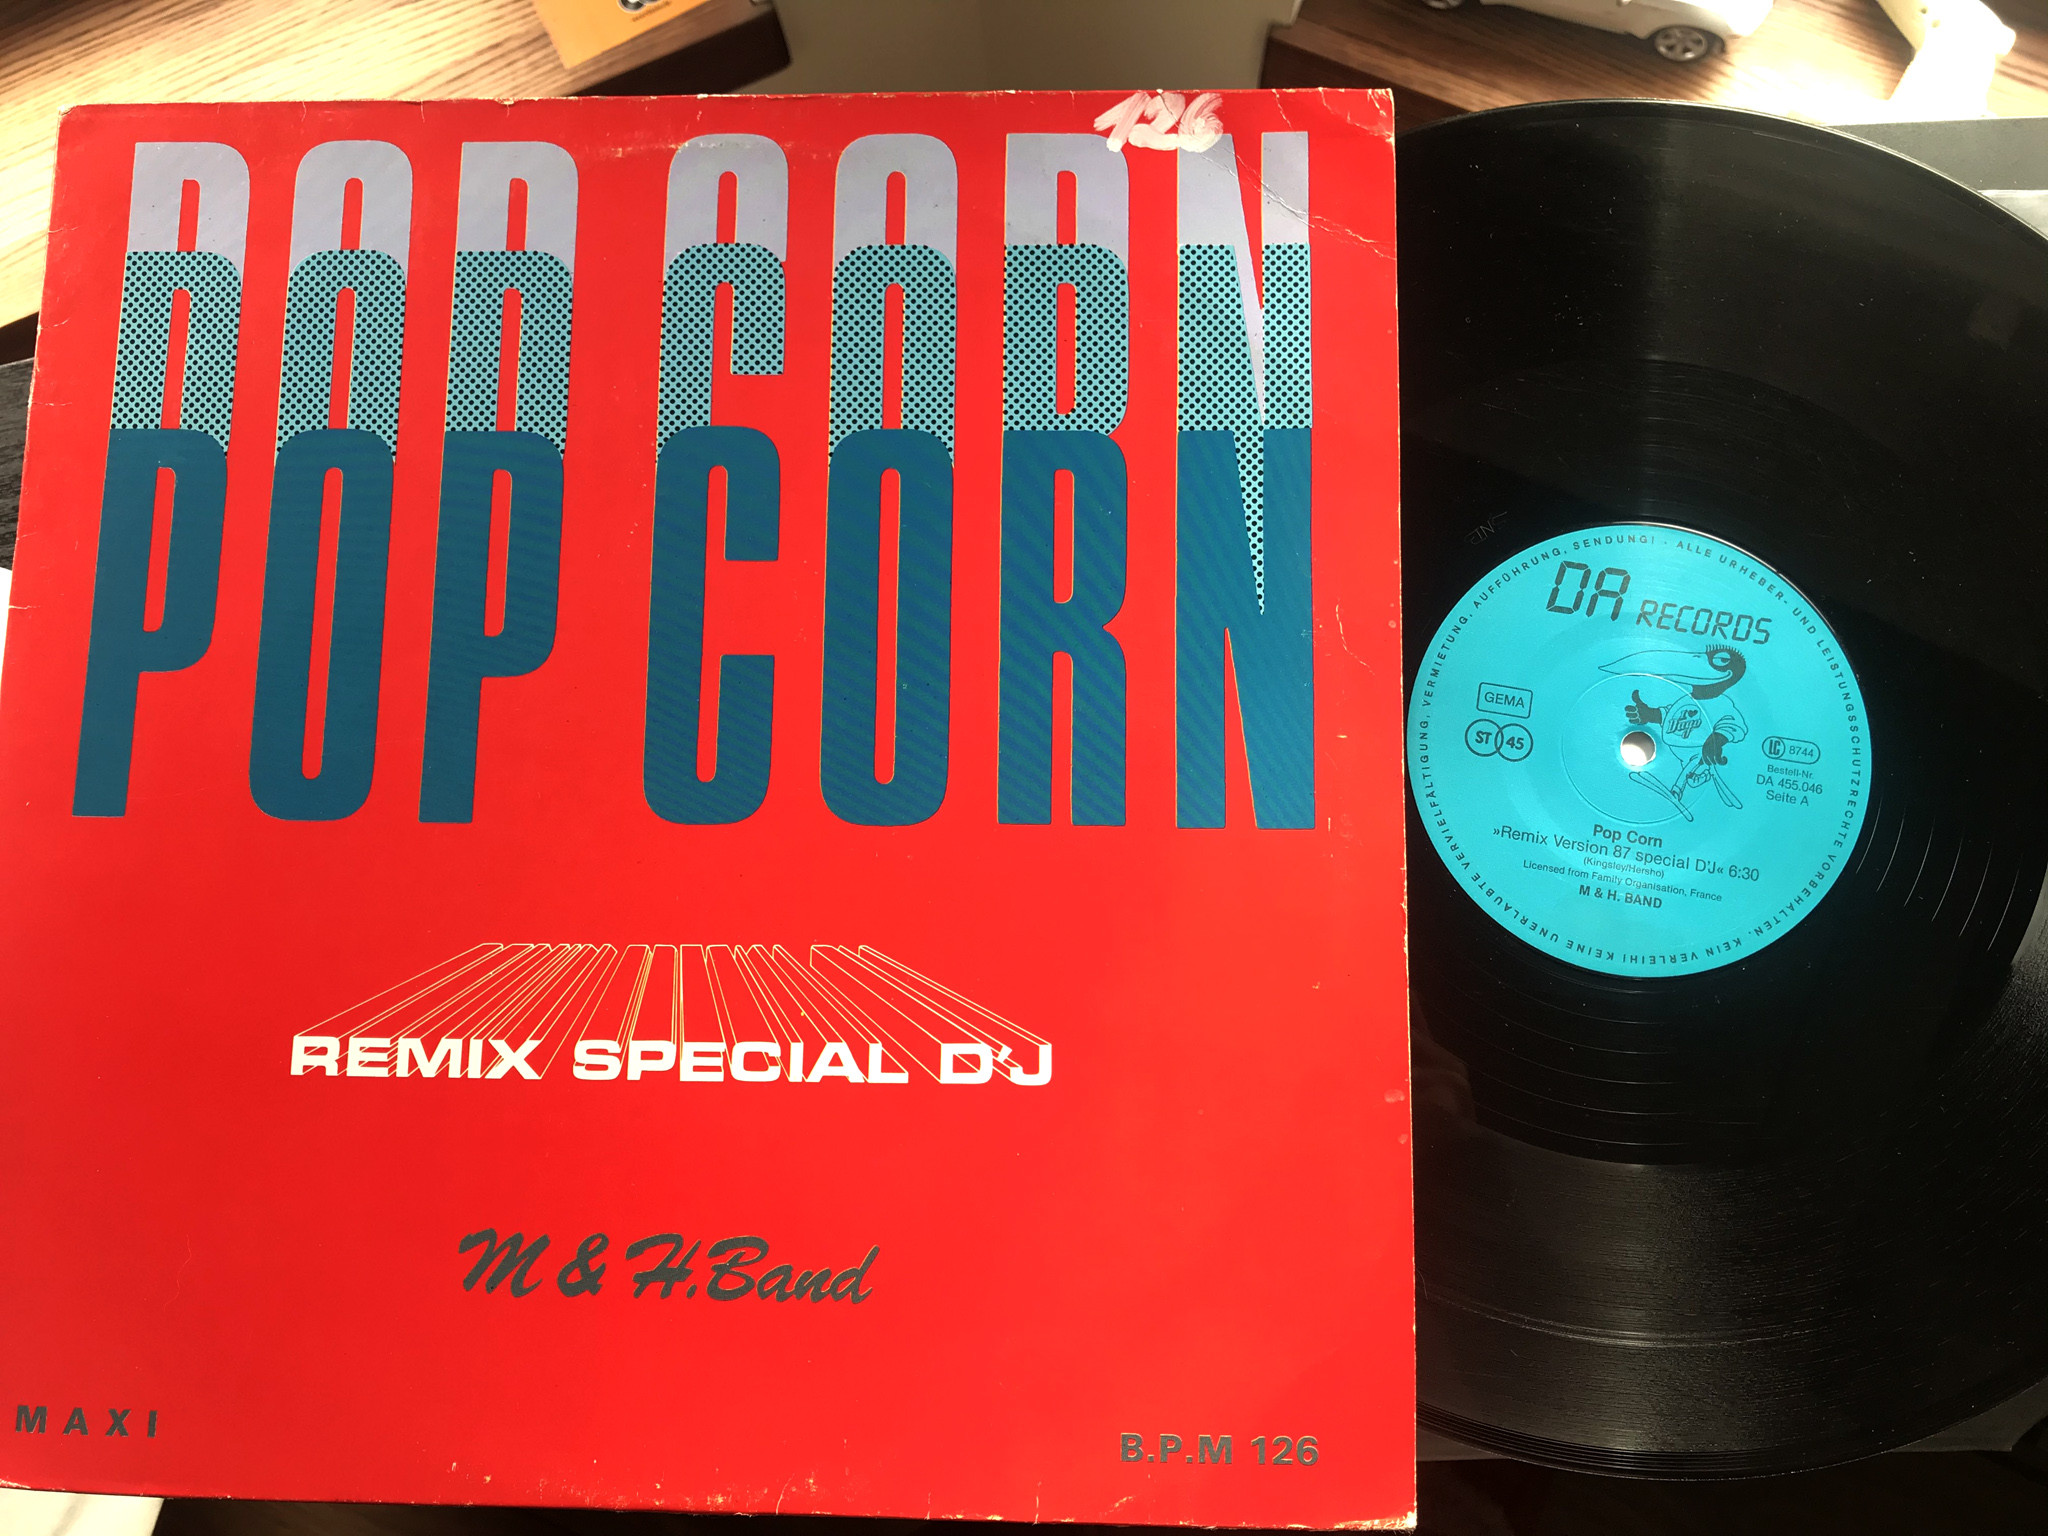 M And H.Band - Pop Corn (Remix)